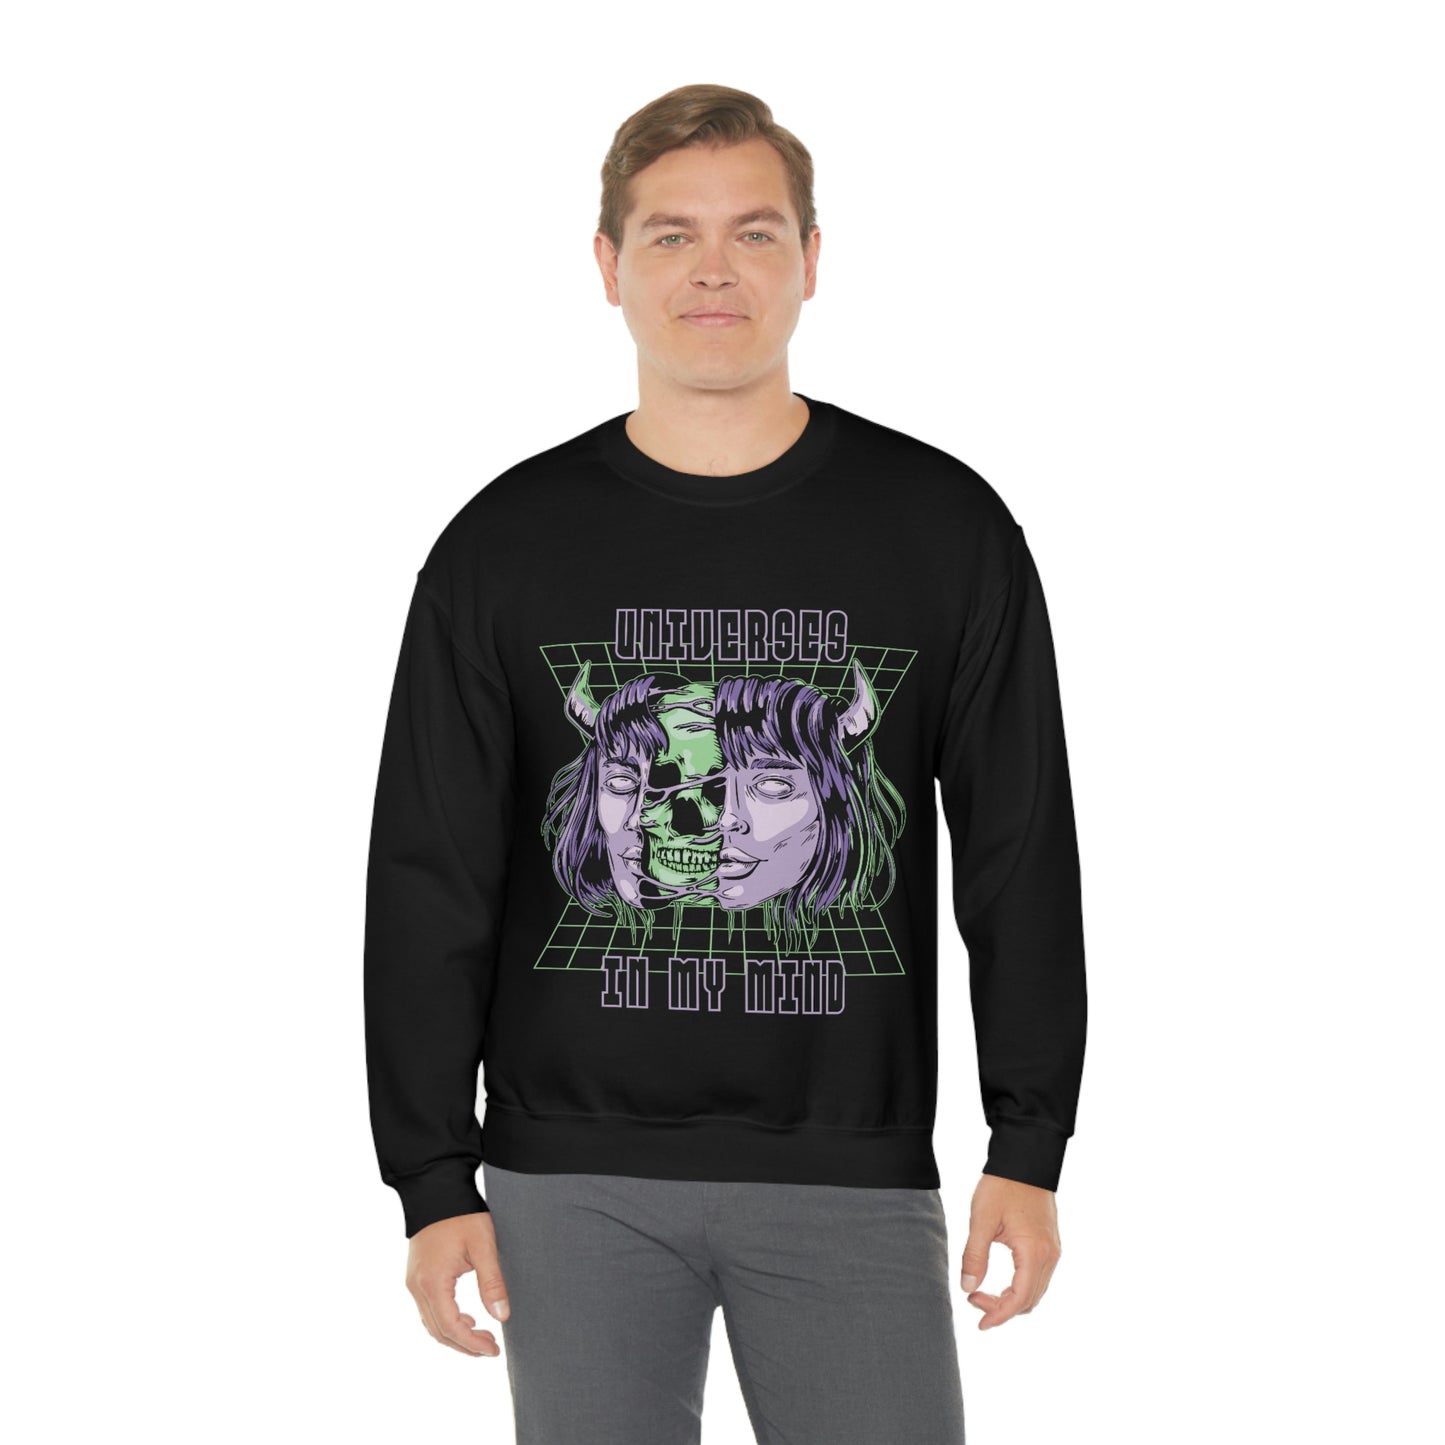 Universes In My Mind Pastel Goth Aesthetic Cyber Sweatshirt